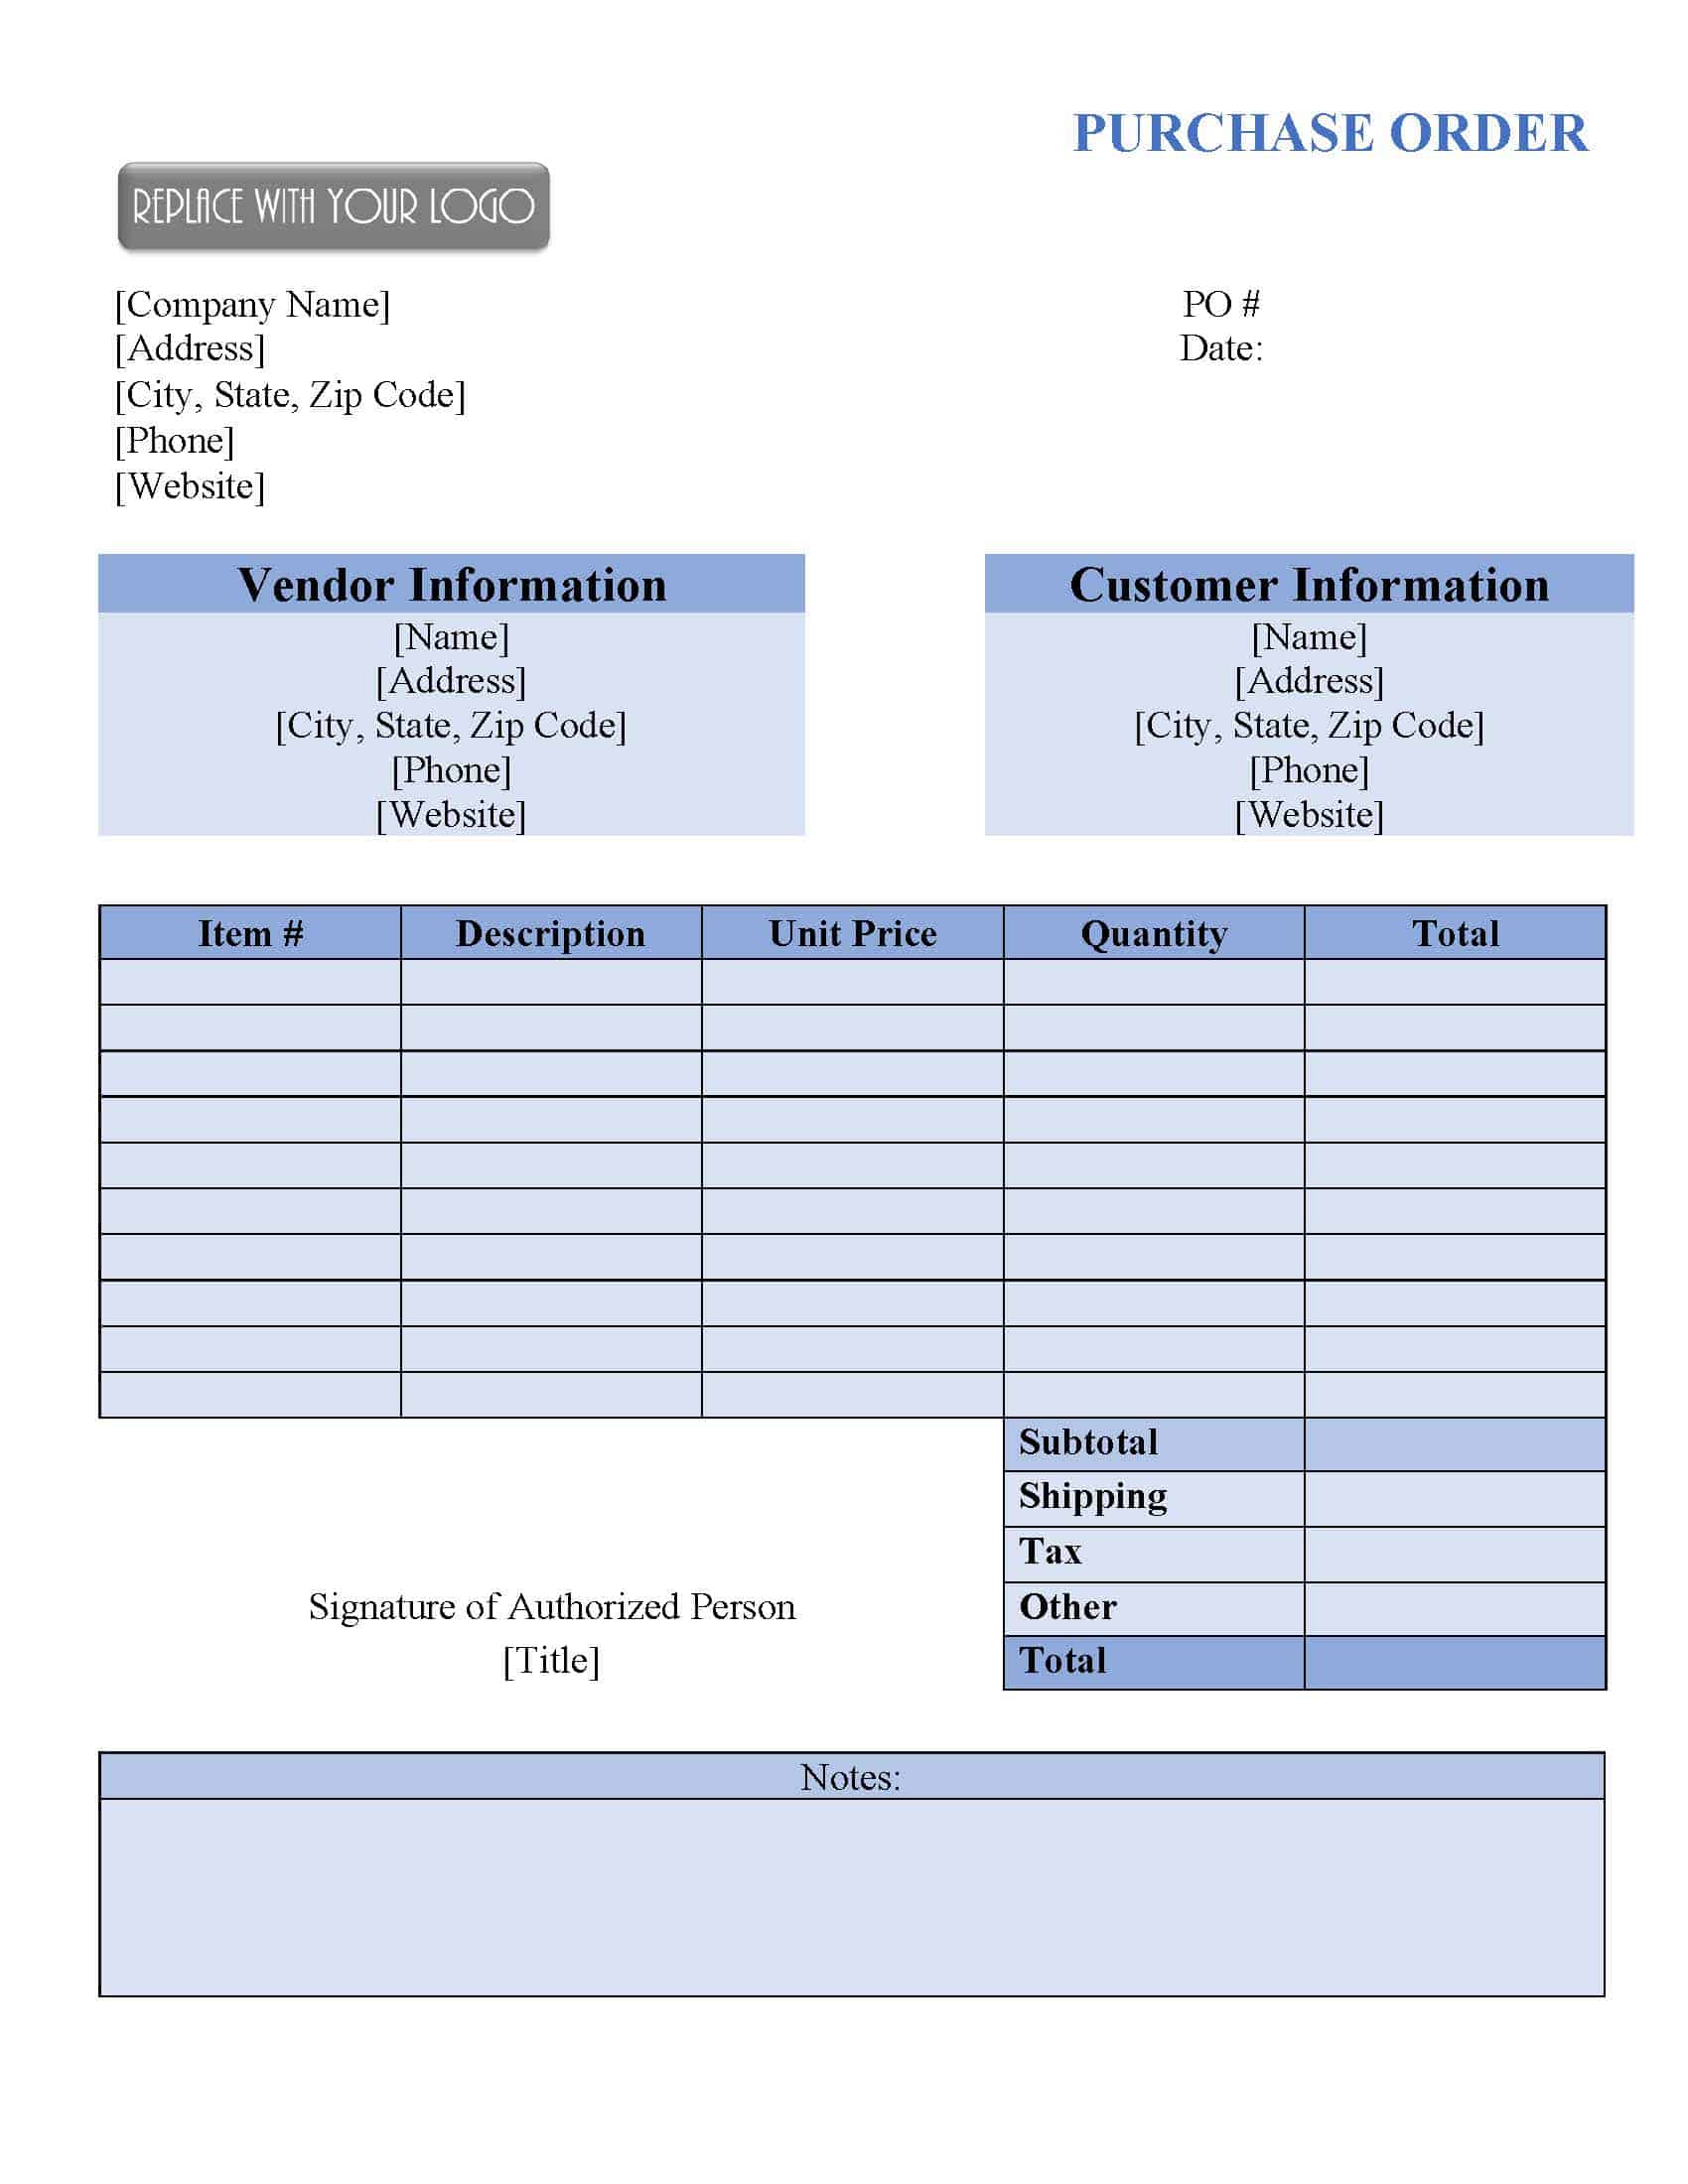 printable-procurement-form-printable-forms-free-online